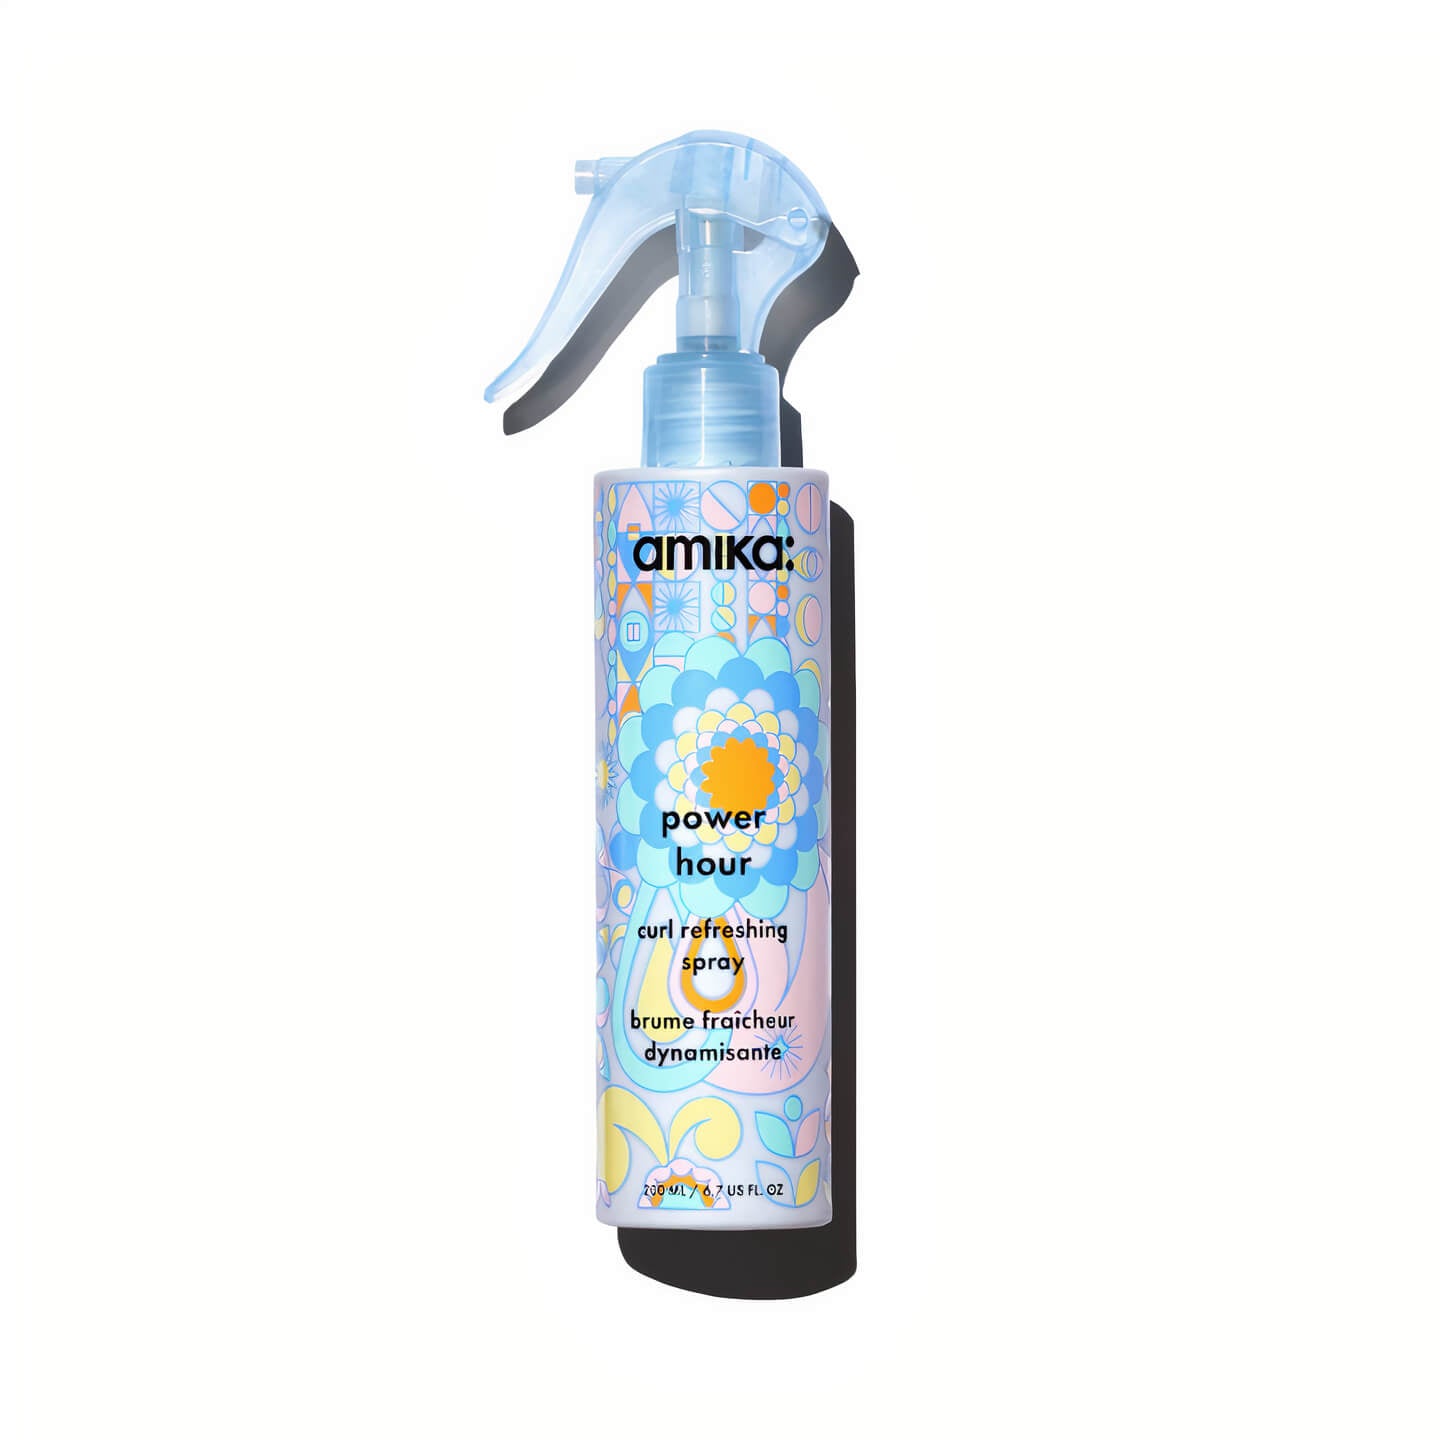 Amika: Power Hour Curl Refreshing Spray